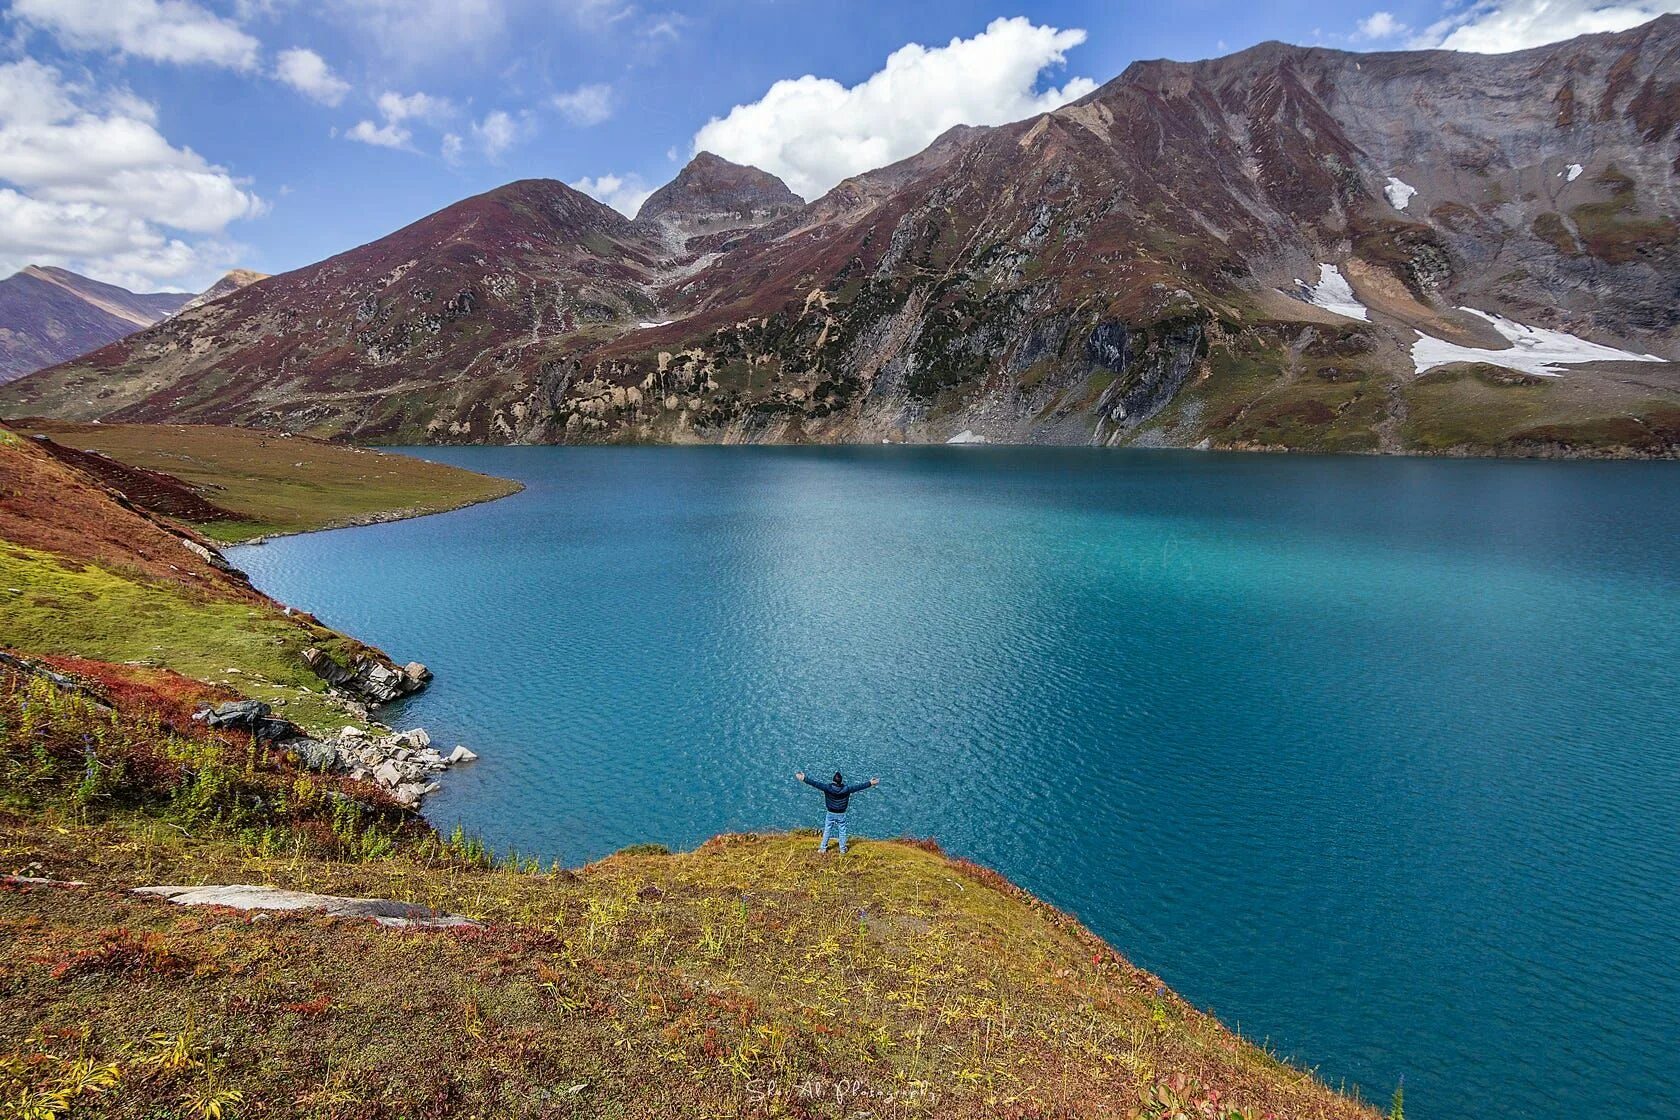 Area north. Озеро Ратти Гали. Travel+Adventure Кашмир. Шимшаль Пакистан озеро. Мачхар Пакистан озеро.